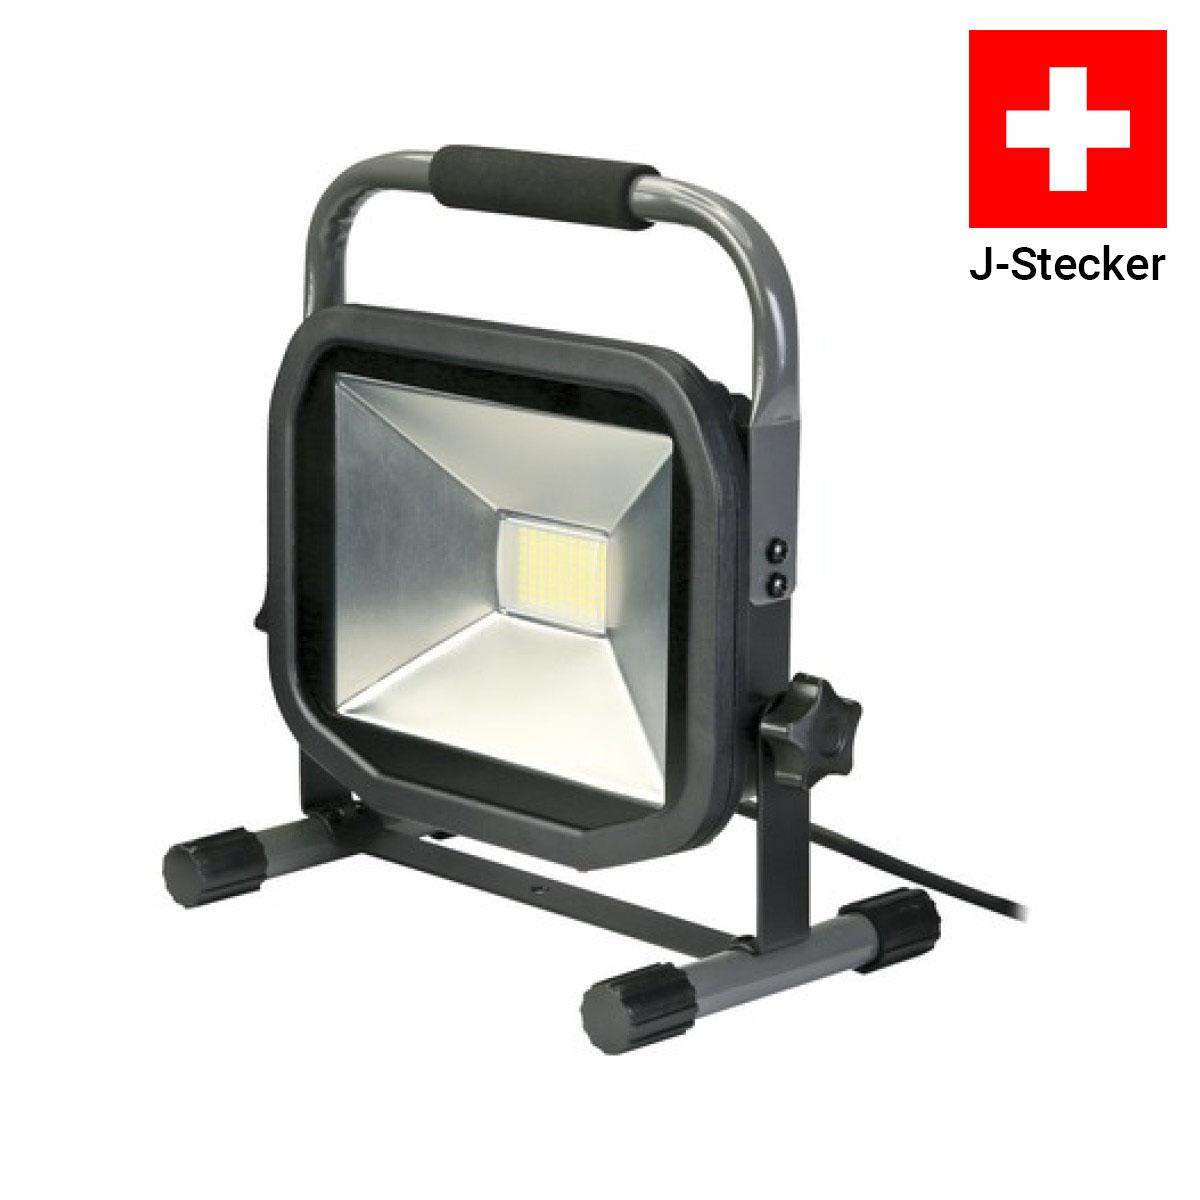 Luceco LED Strahler IP65 38W 3000lm Schweizer J-Stecker 5000K kaltweiß schwarz/grau